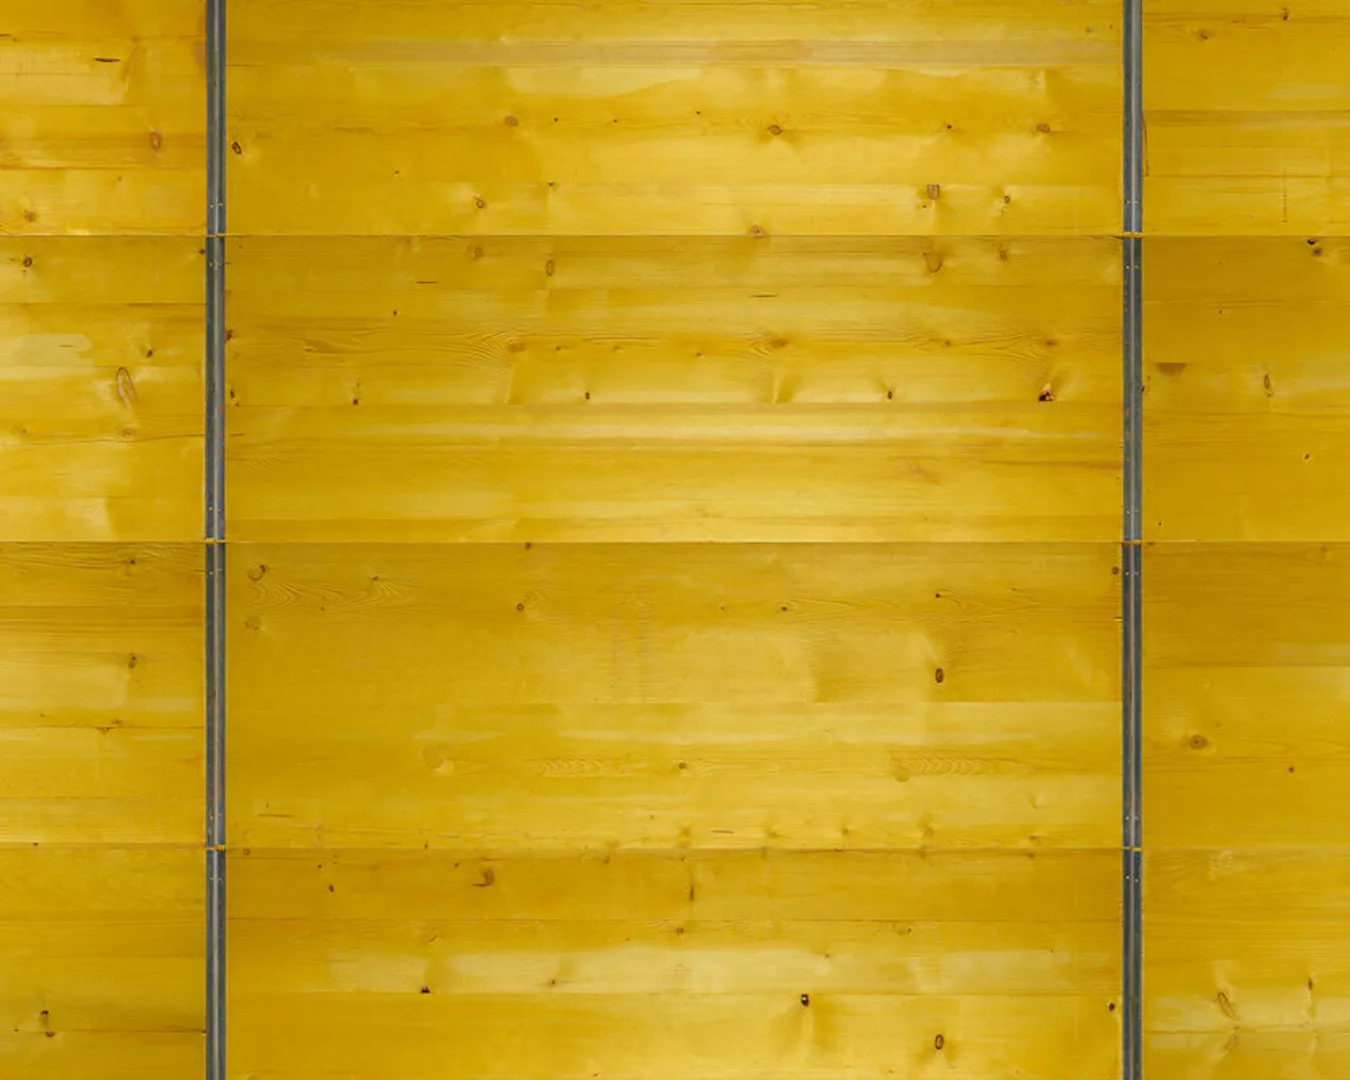 Fototapete "Holzbrett gelb" 4,00x2,50 m / Glattvlies Perlmutt günstig online kaufen